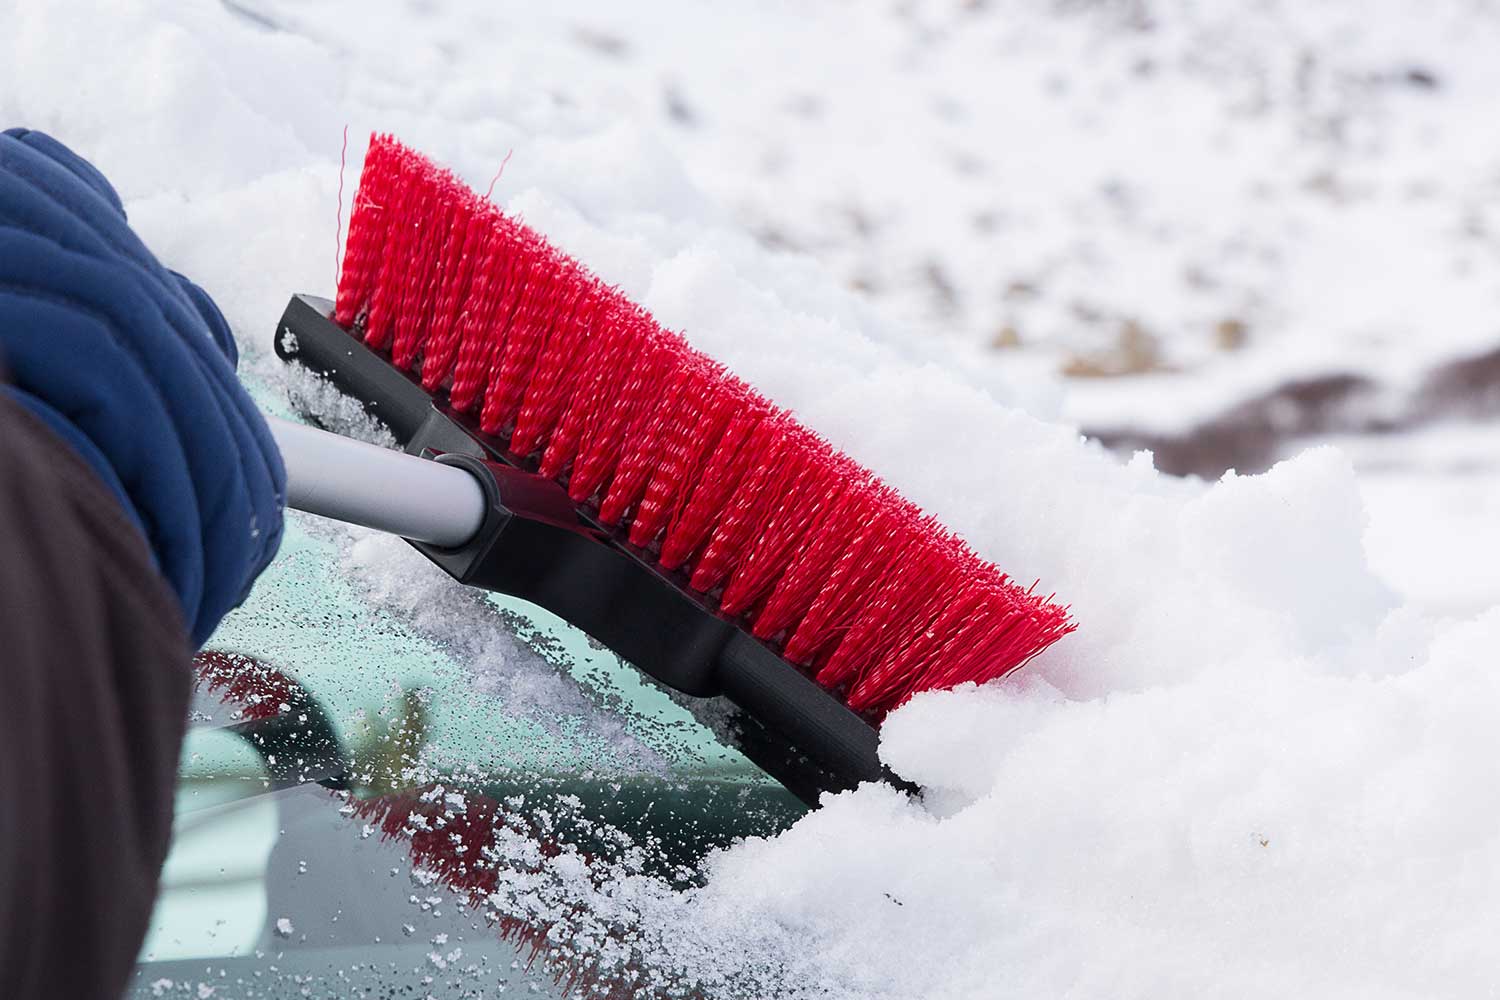 Mallory S30-886PKUS Snow Brush & Ice Scraper with Foam Grip